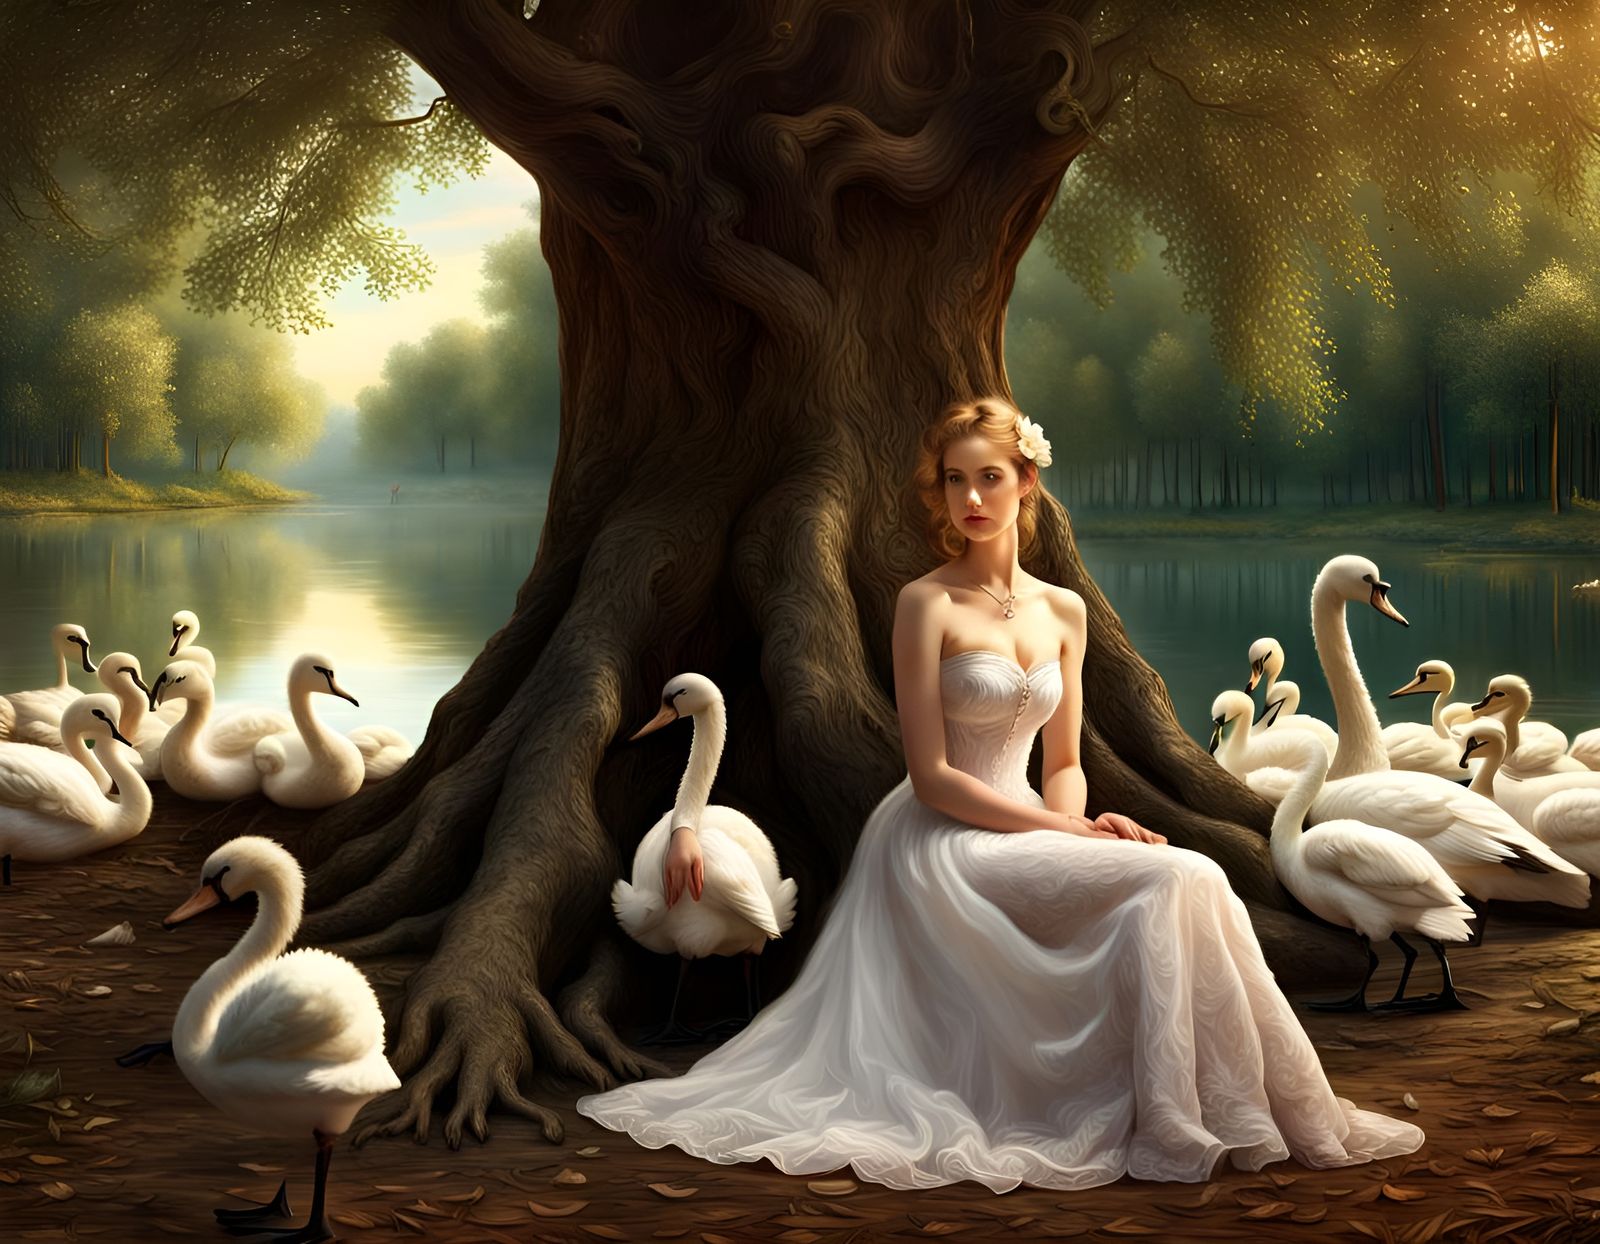 Waiting Amongst Swans